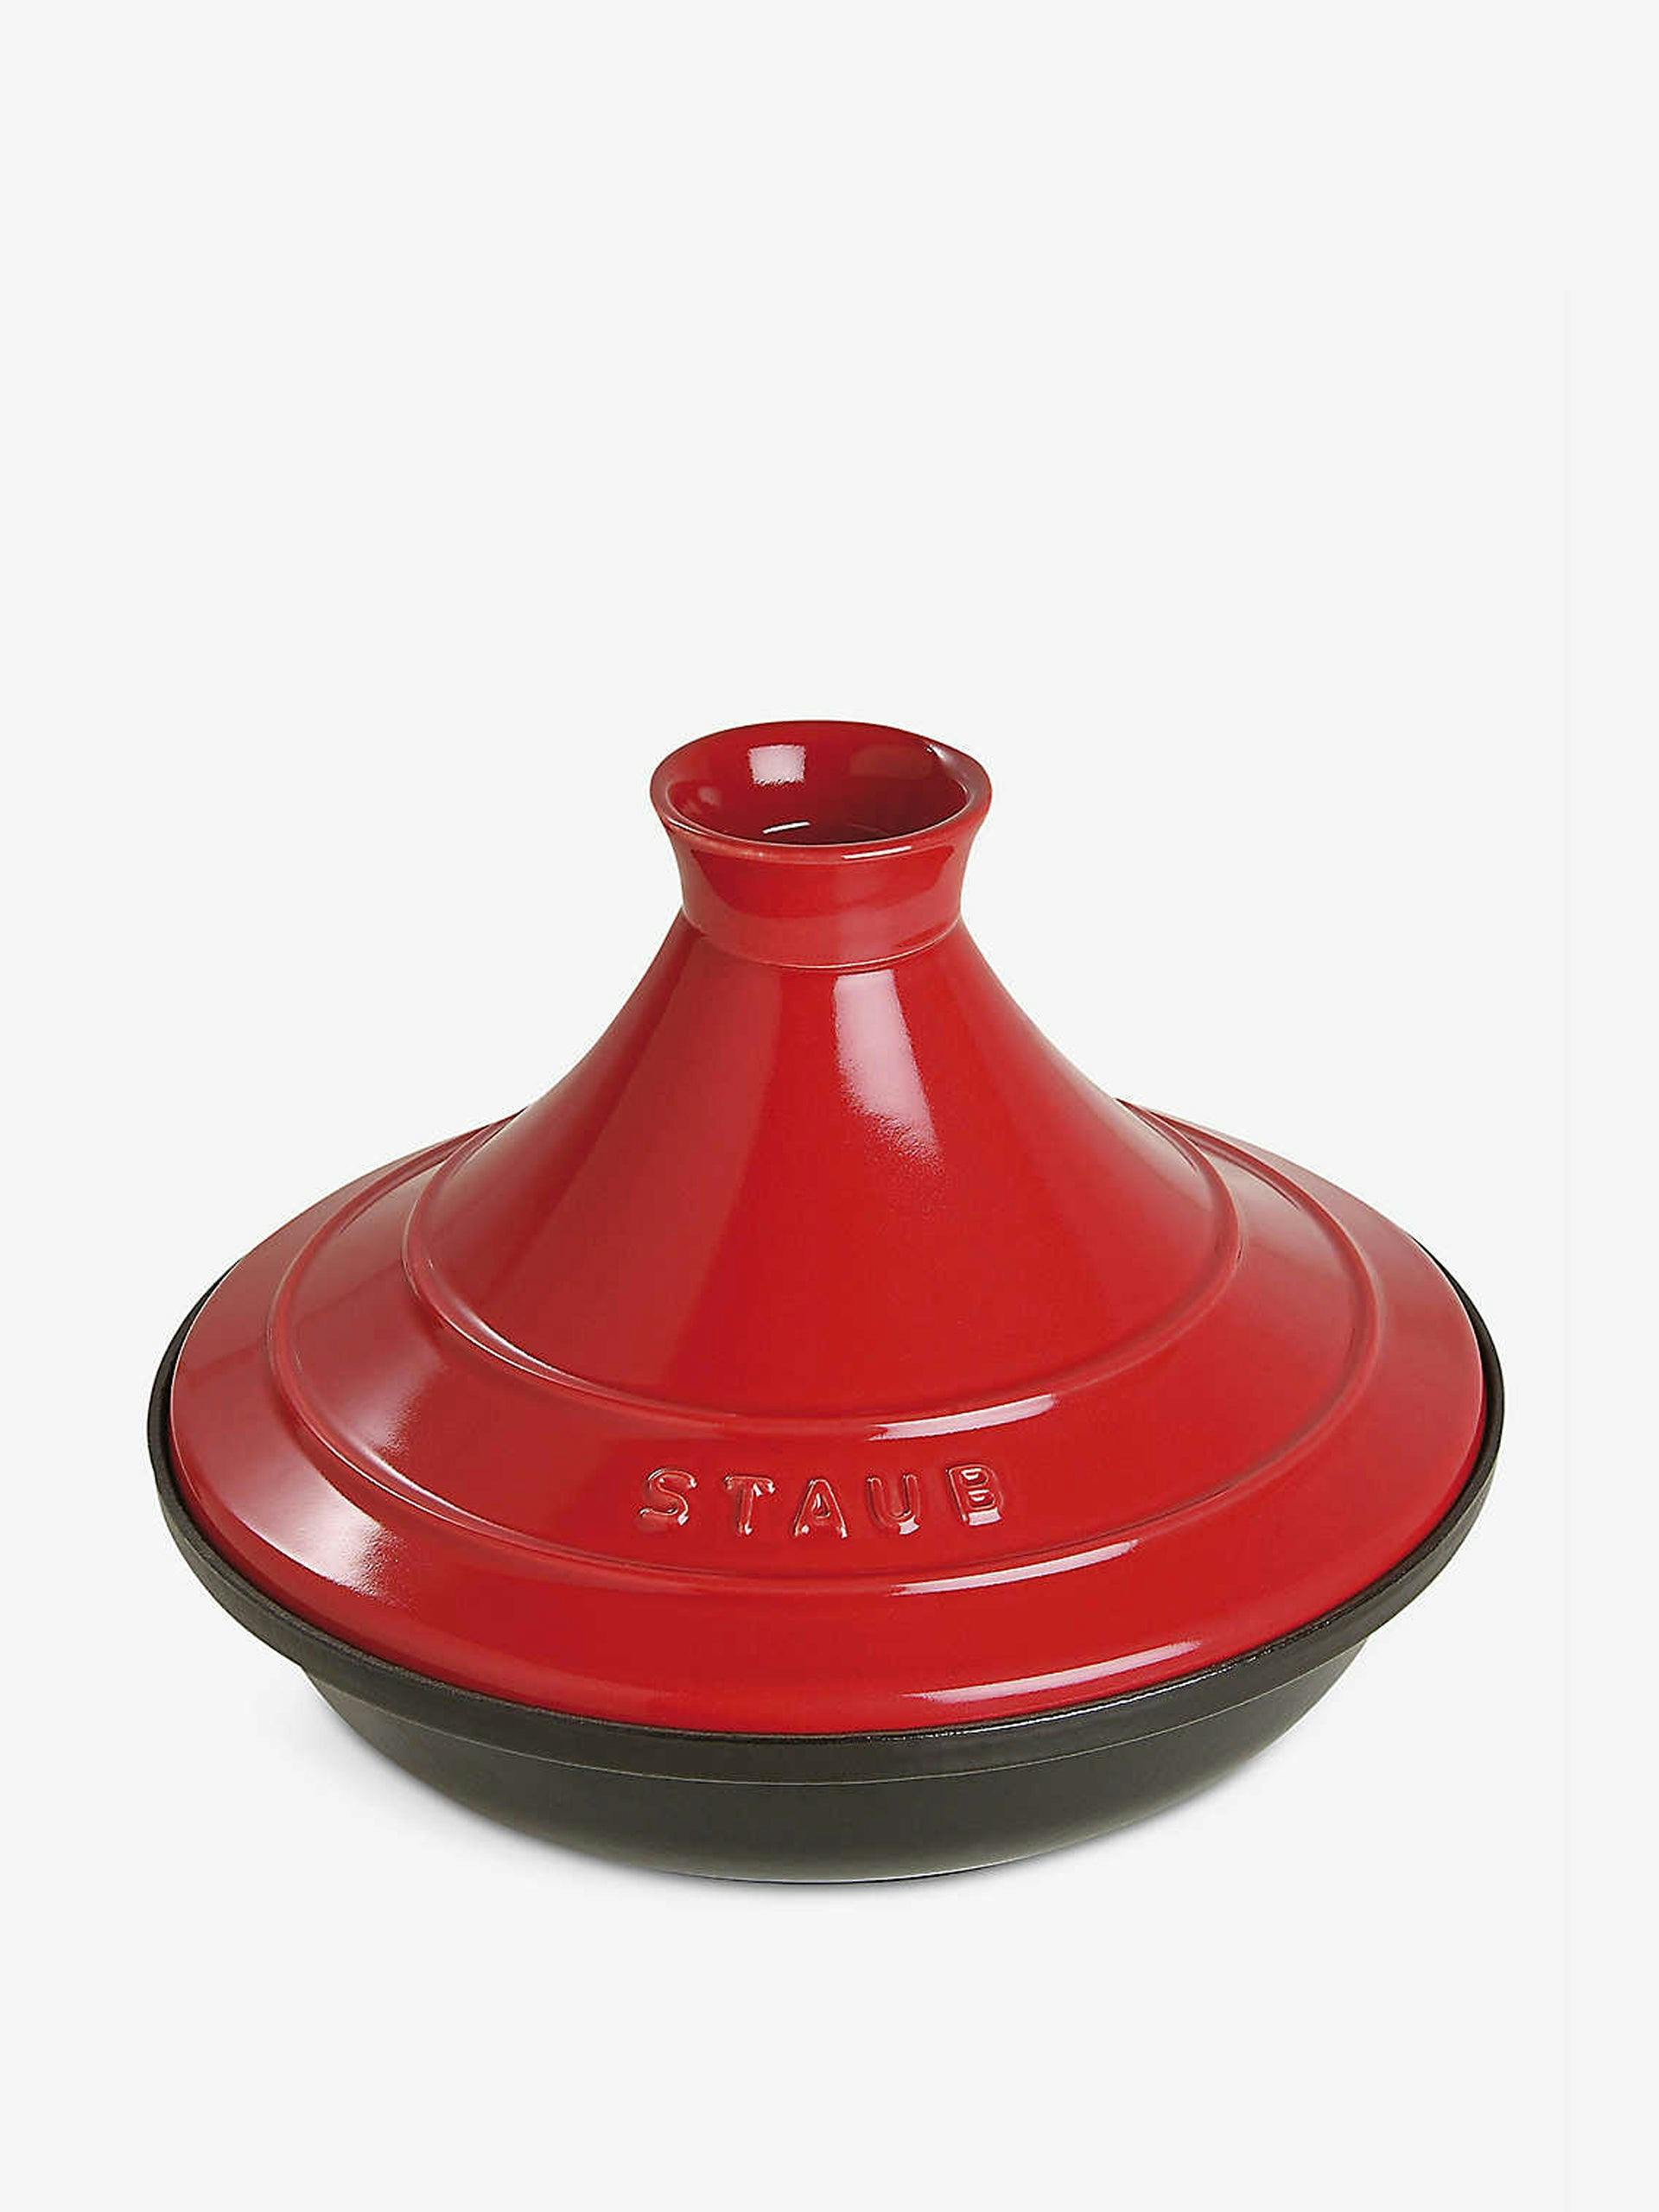 Red cast-iron tagine pot